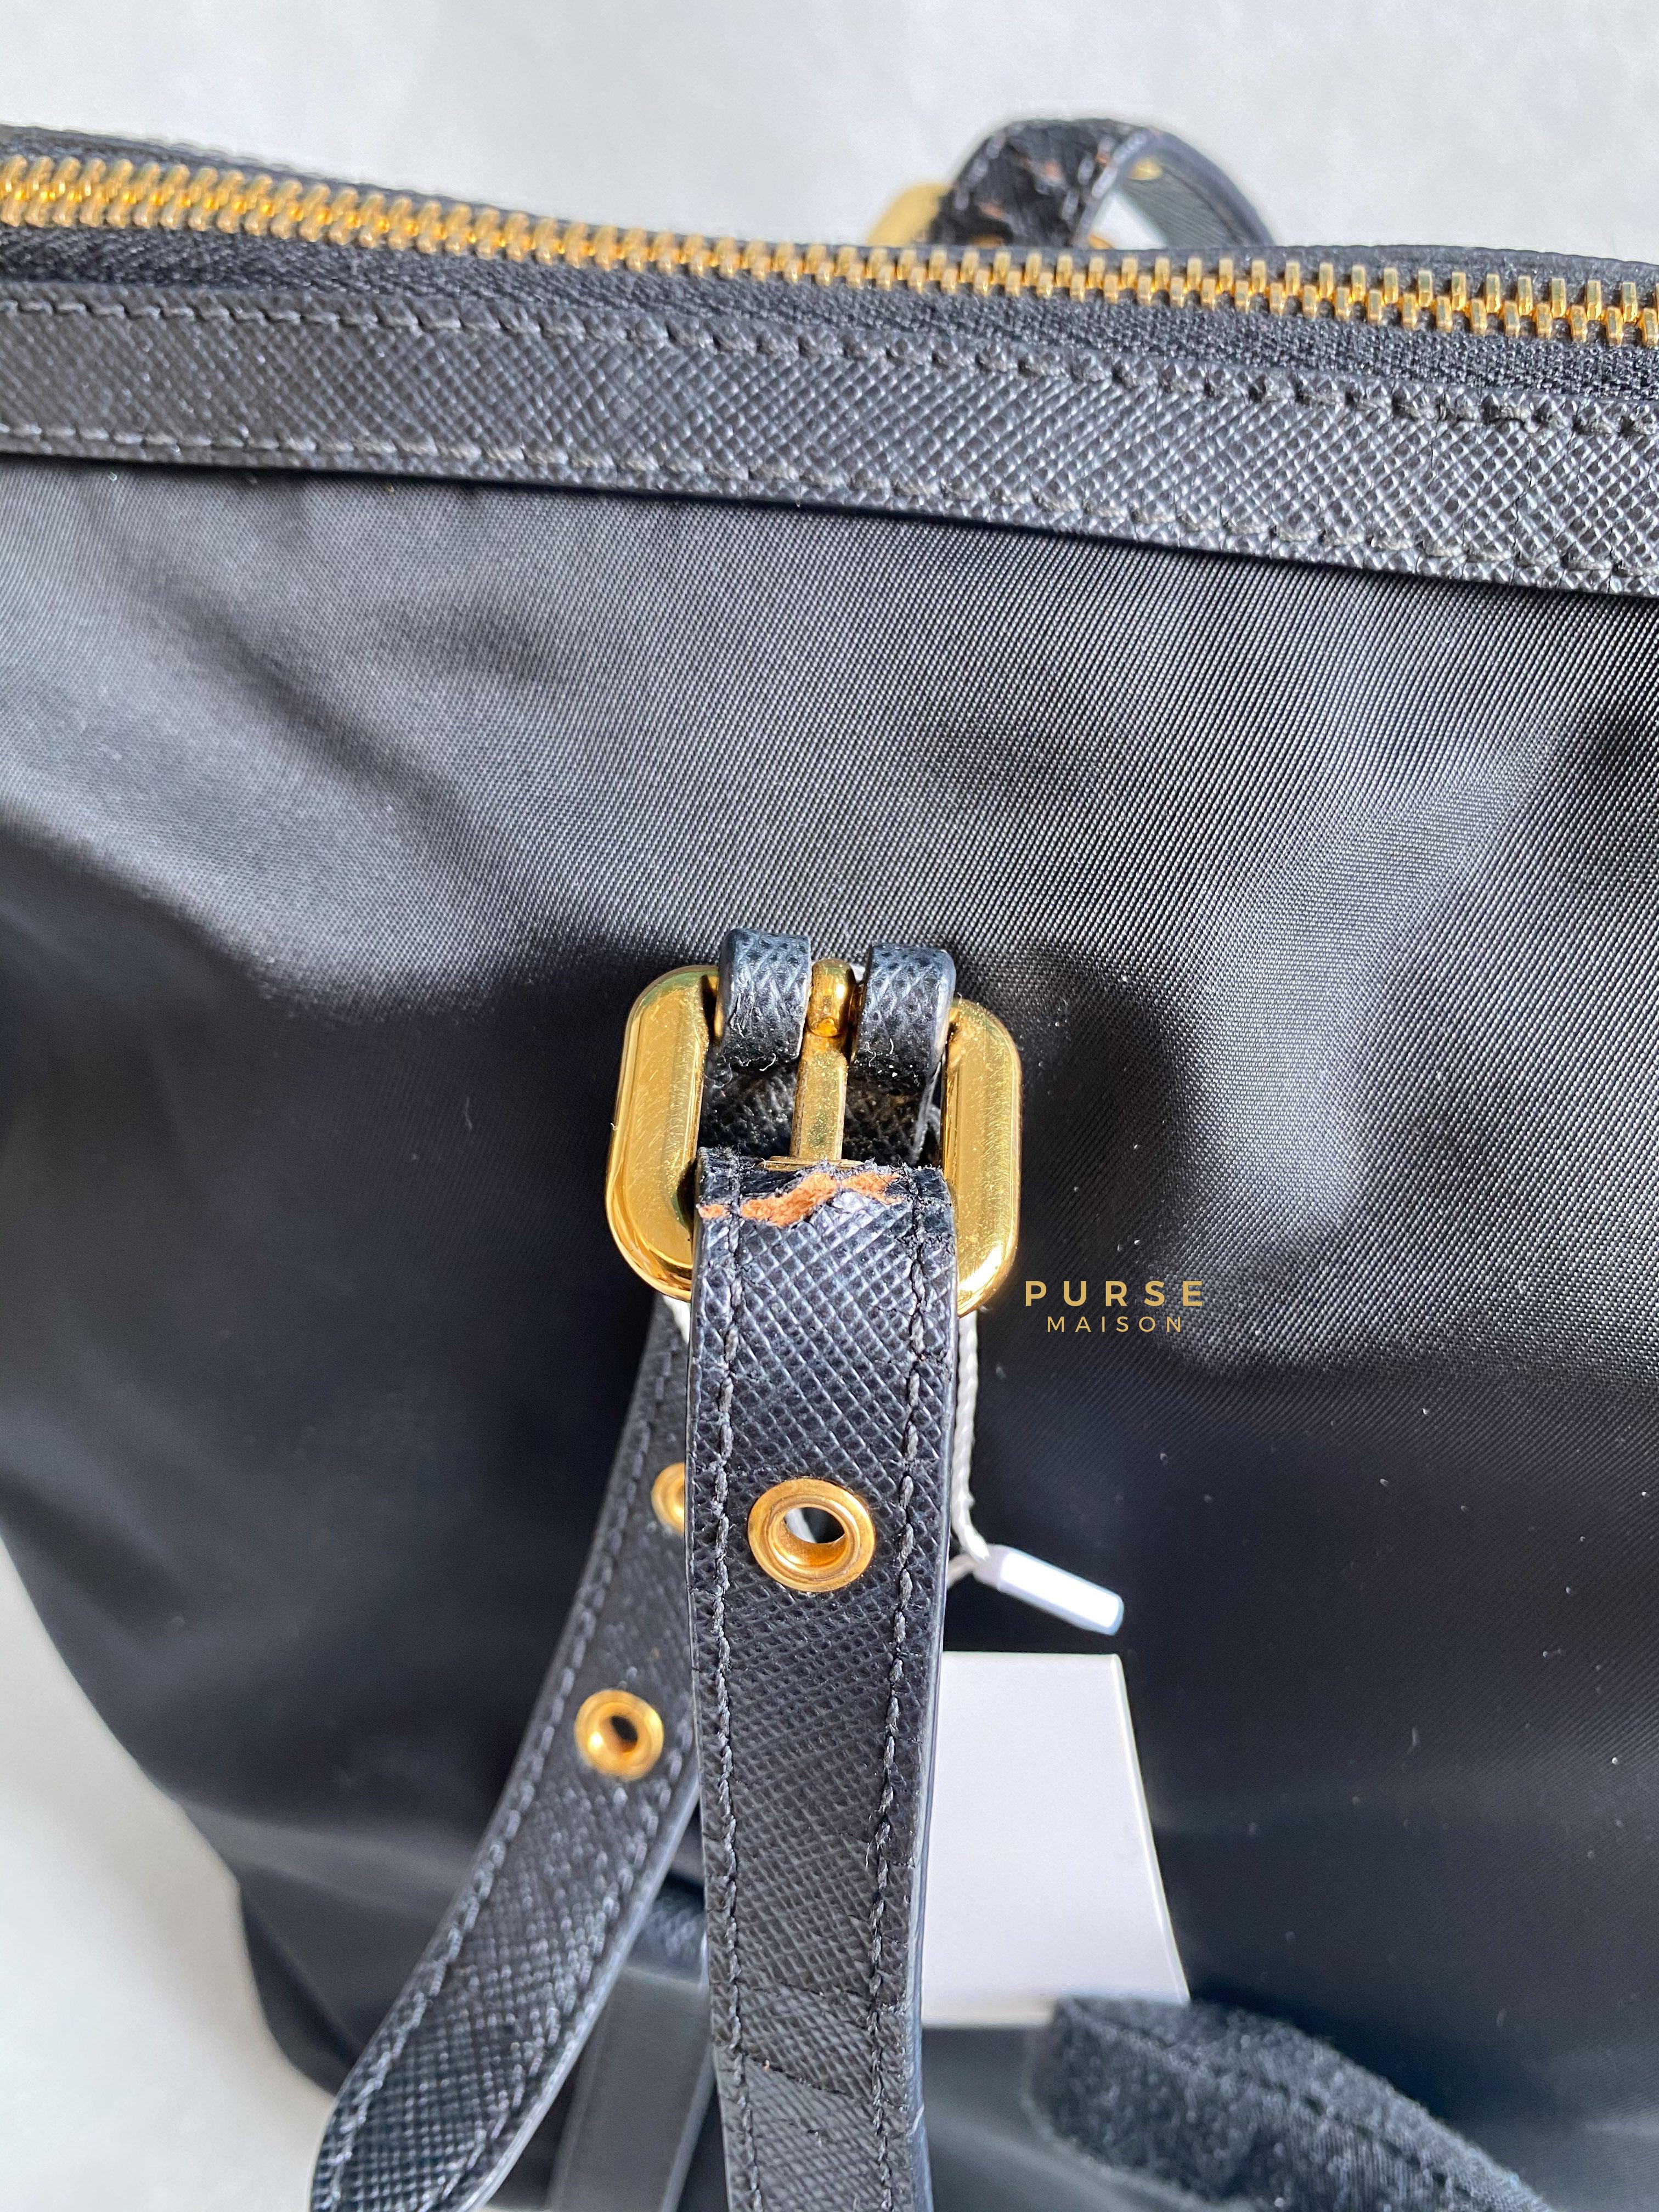 Prada Tessuto Saffiano Nylon Black Tote Bag | Purse Maison Luxury Bags Shop